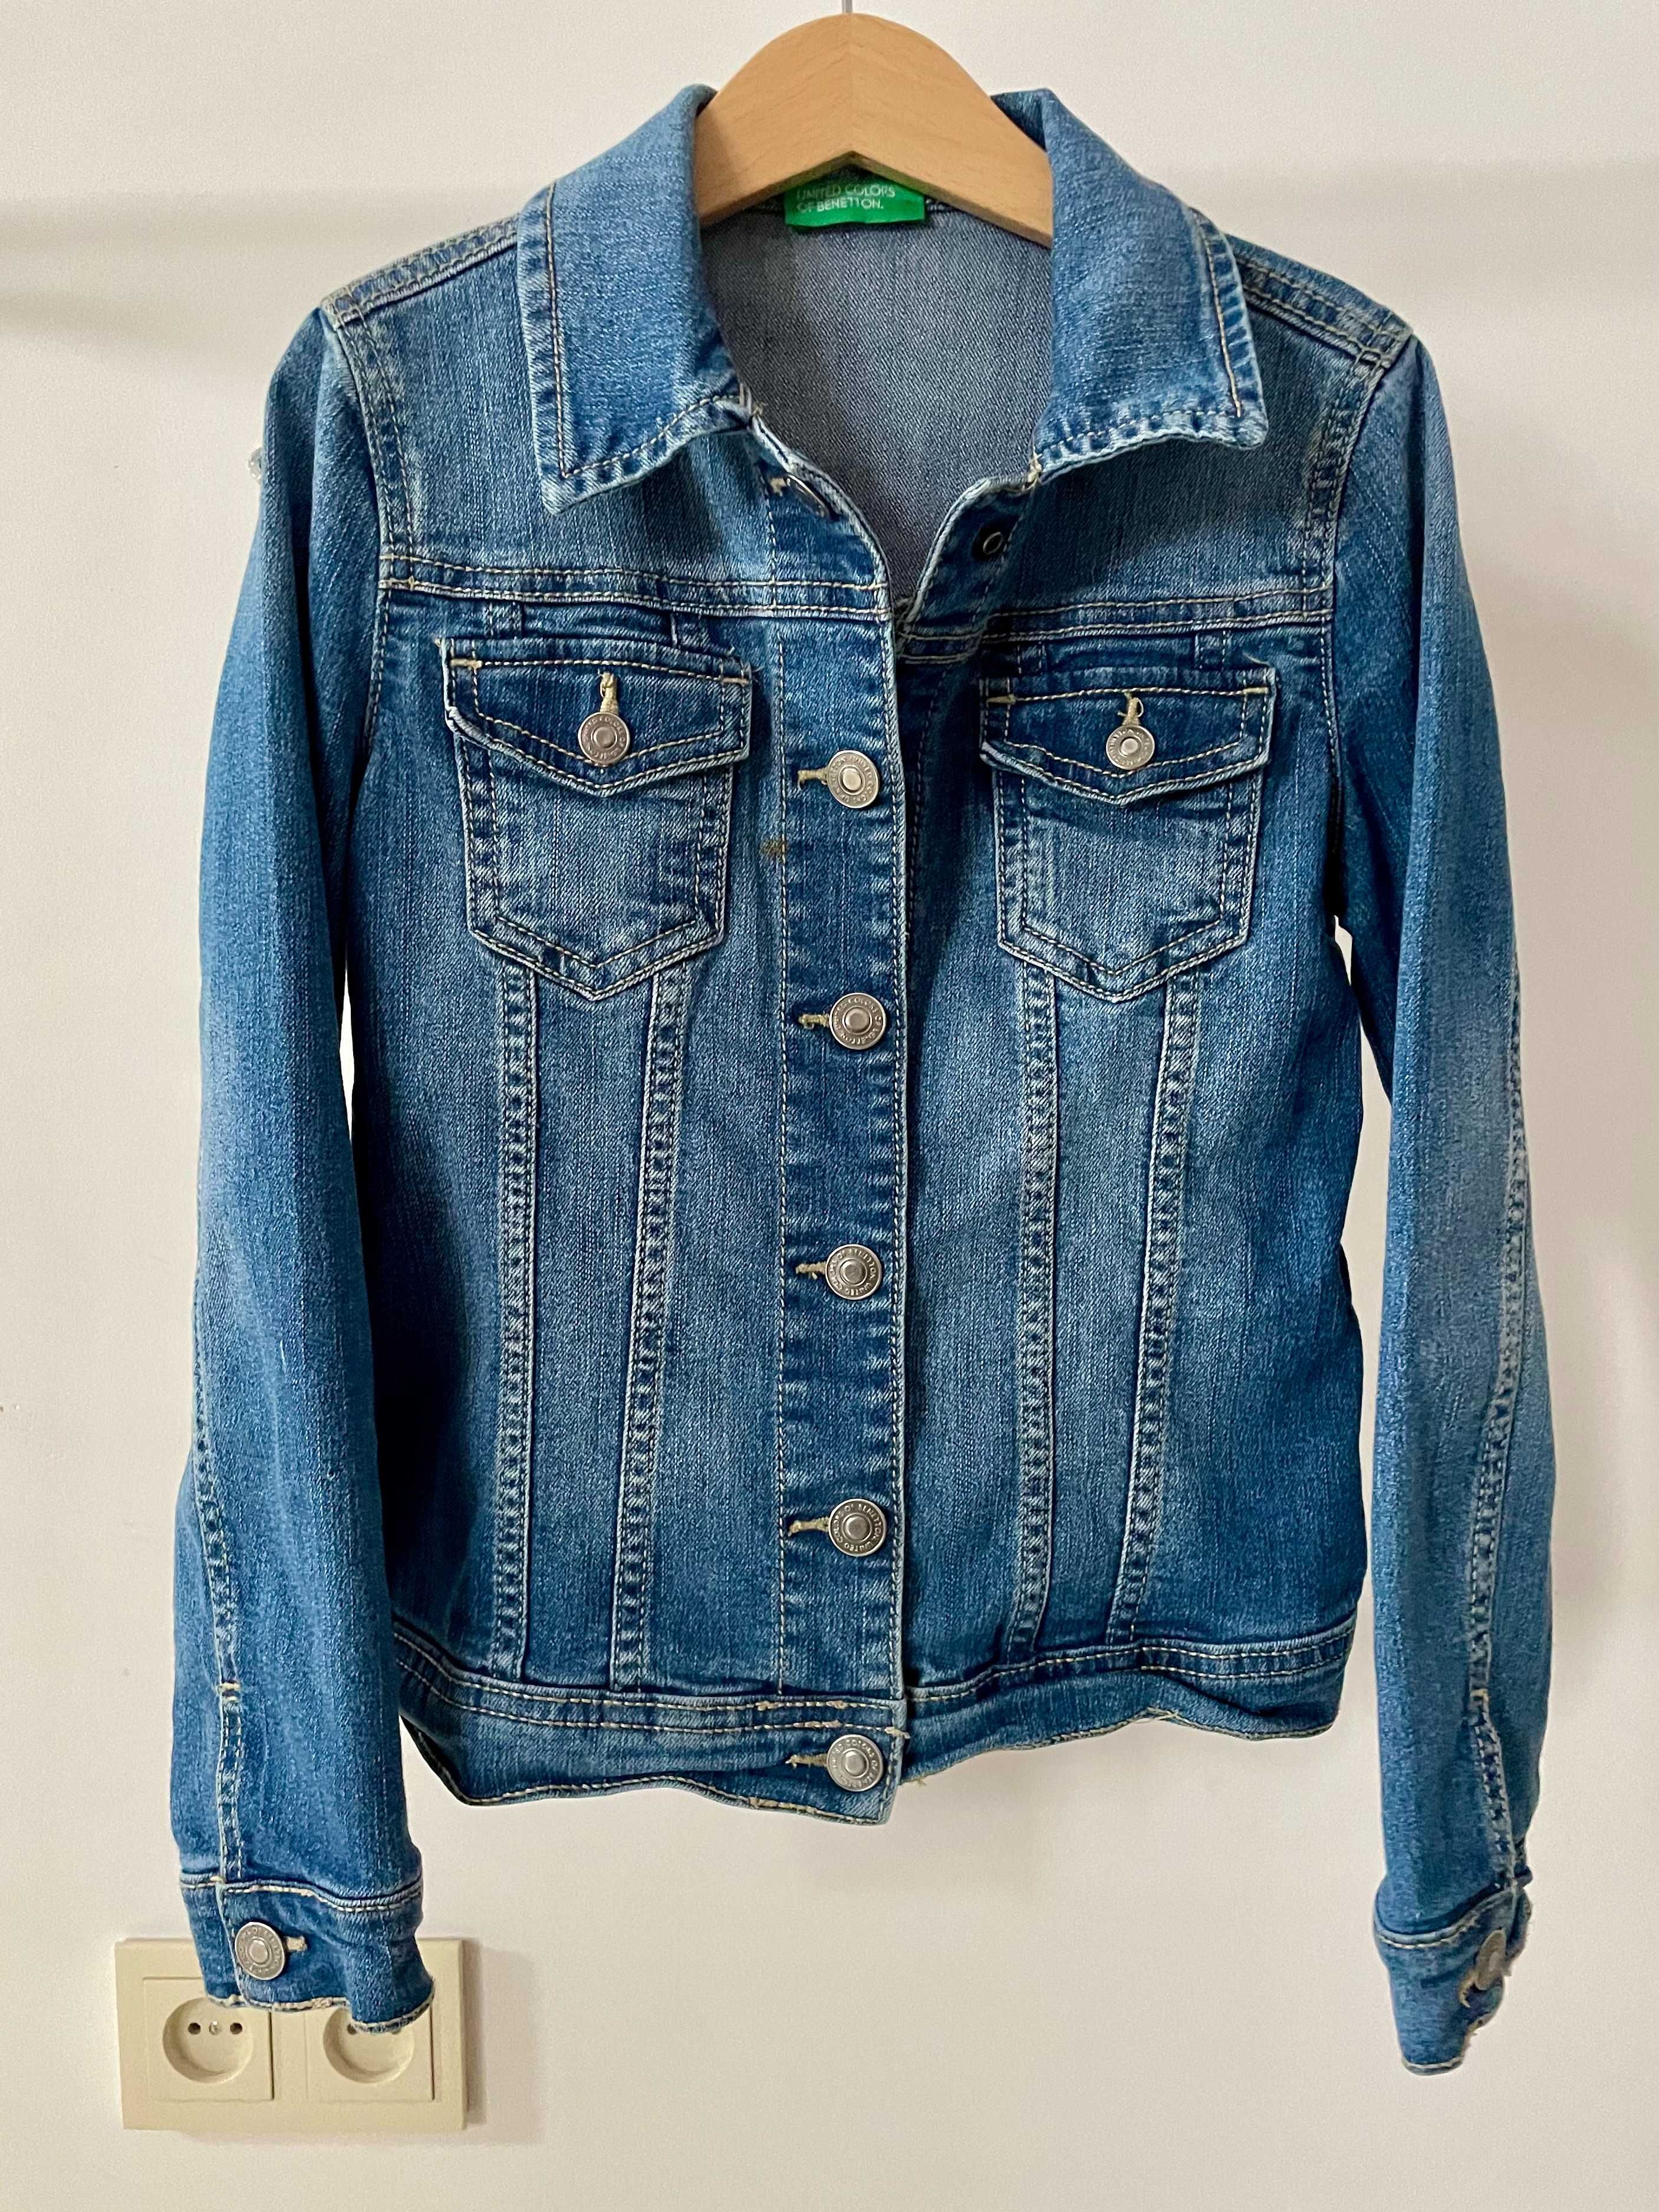 Benetton kurtka jeans dżins 130 cm M 7 -8 lat street klasyczna unisex